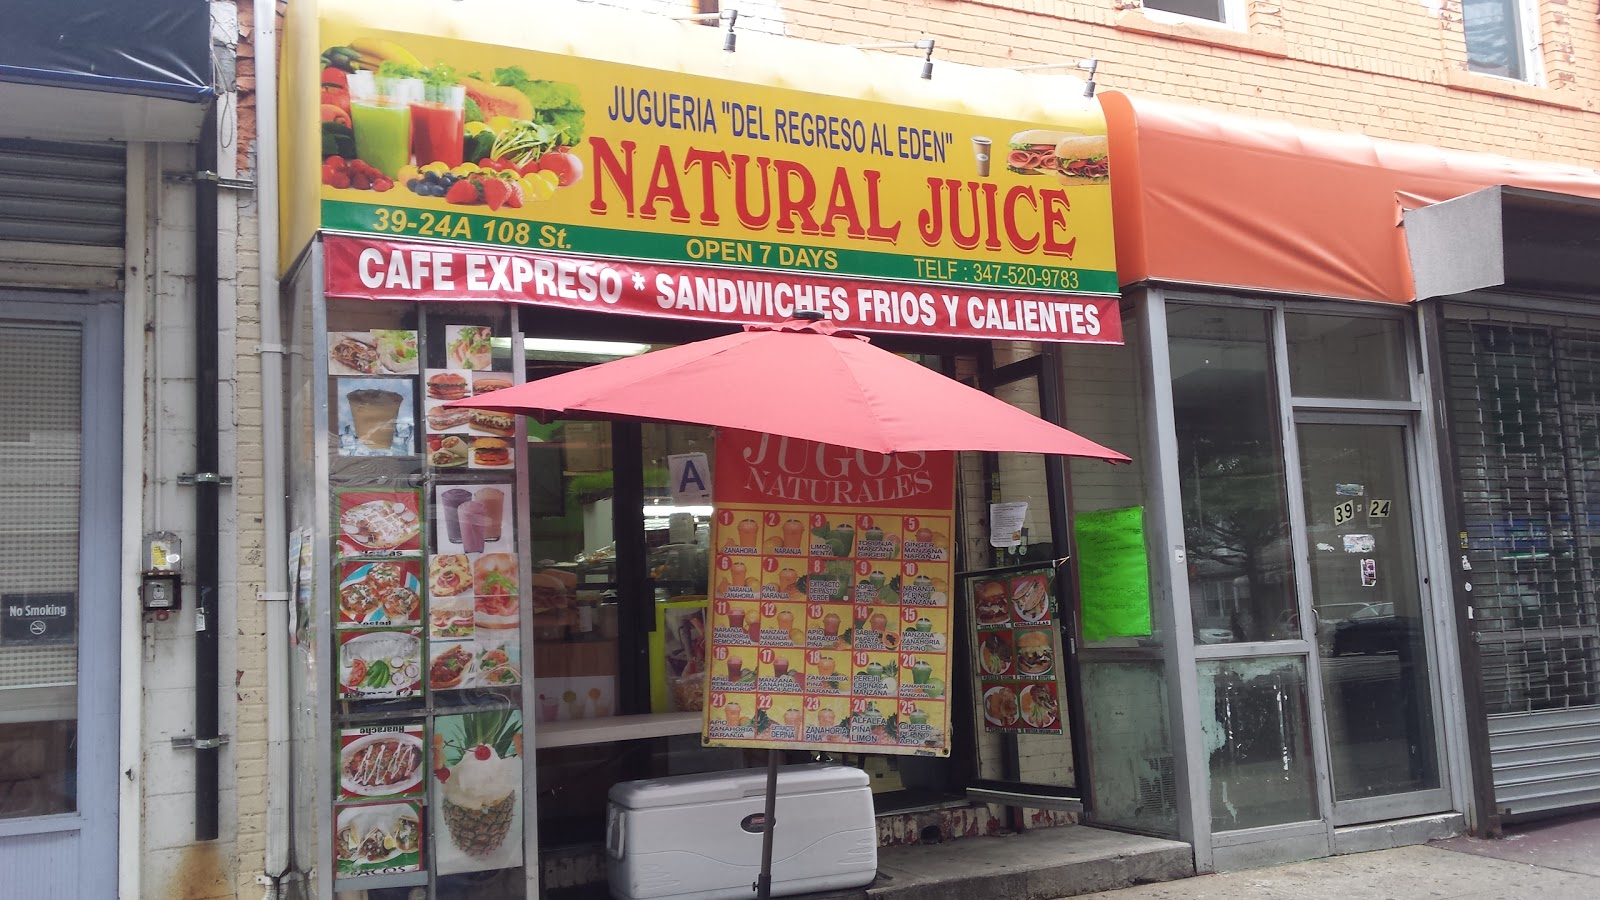 Photo of Del Regreso al Eden in Queens City, New York, United States - 4 Picture of Food, Point of interest, Establishment, Store